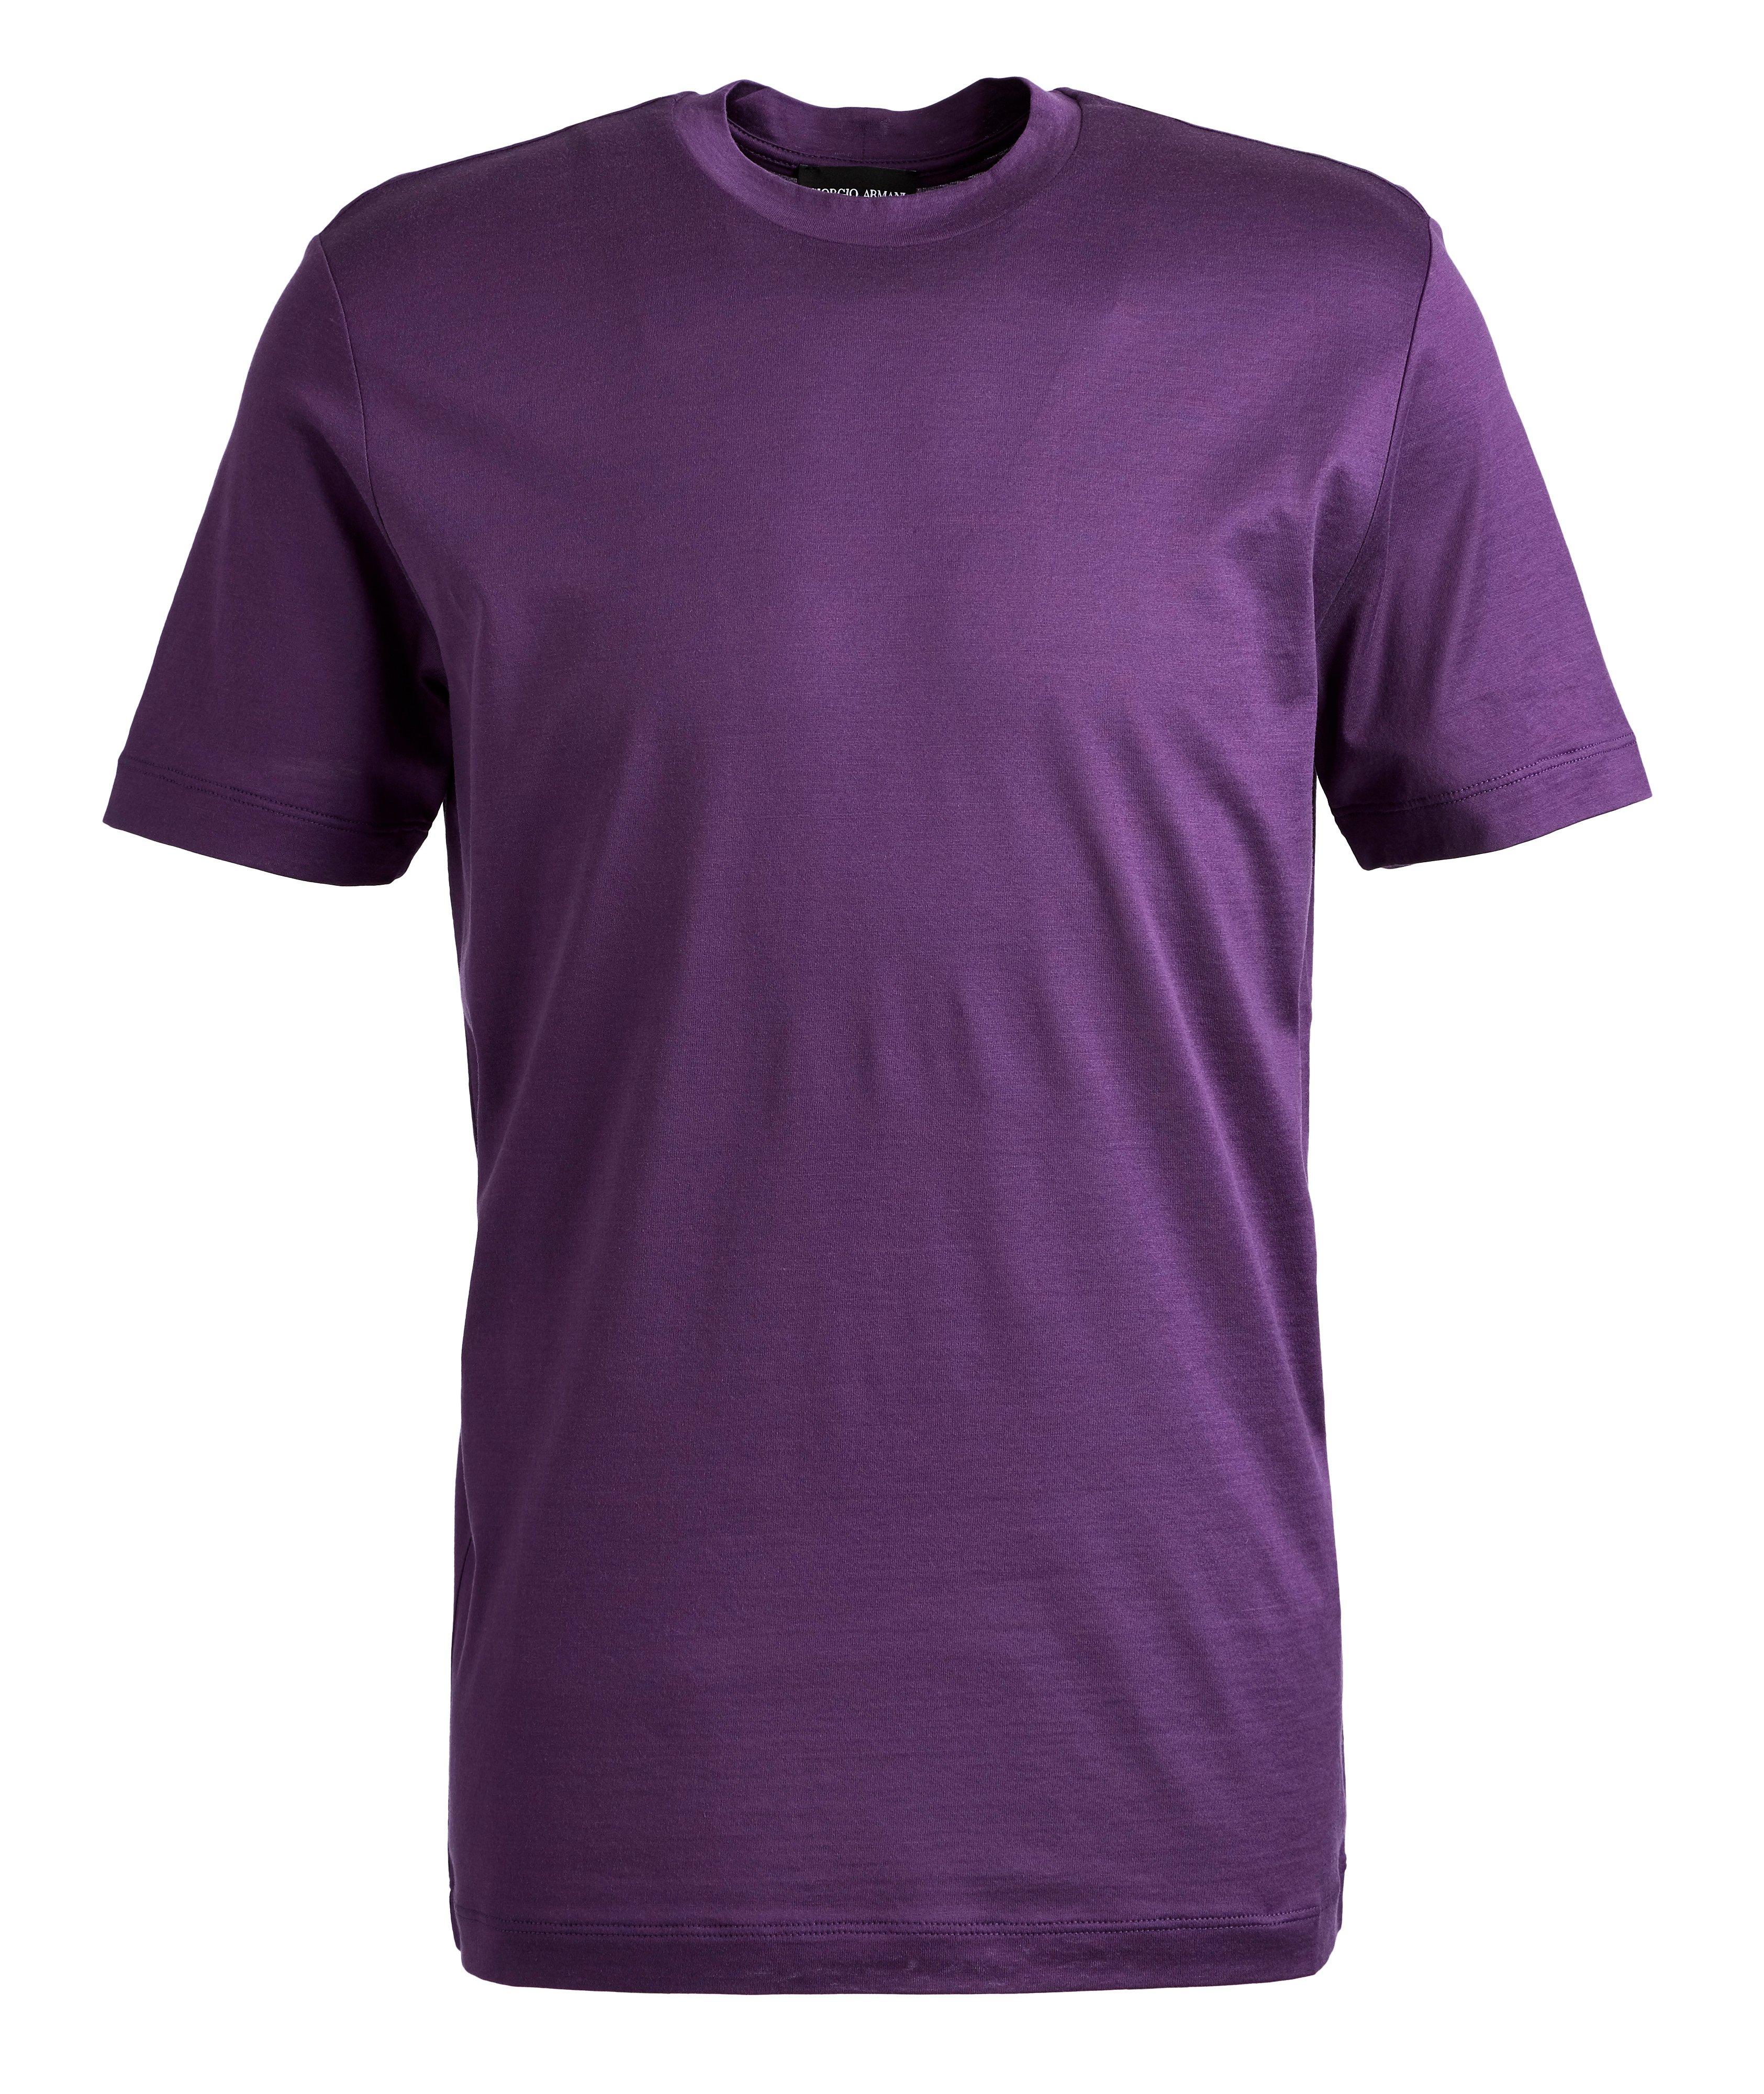 Slim-Fit Silk-Cotton T-Shirt image 0